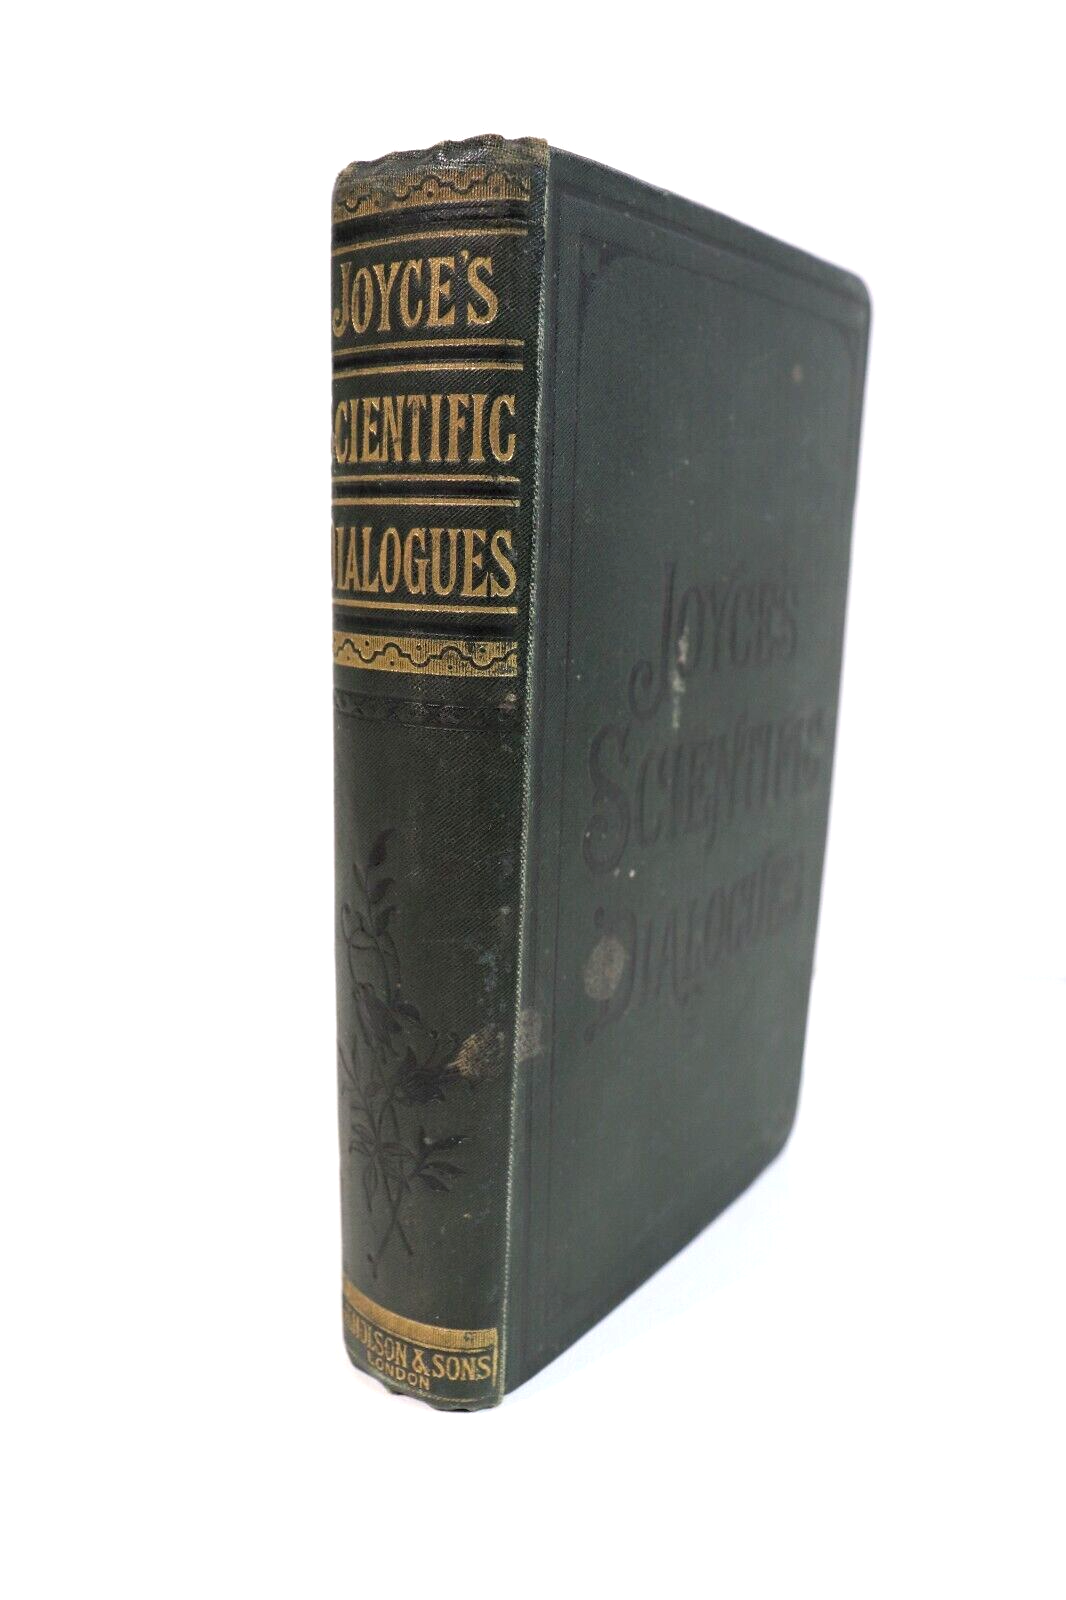 Scientific Dialogues by Rev. J. Joyce - c1882 - Antique Science Book